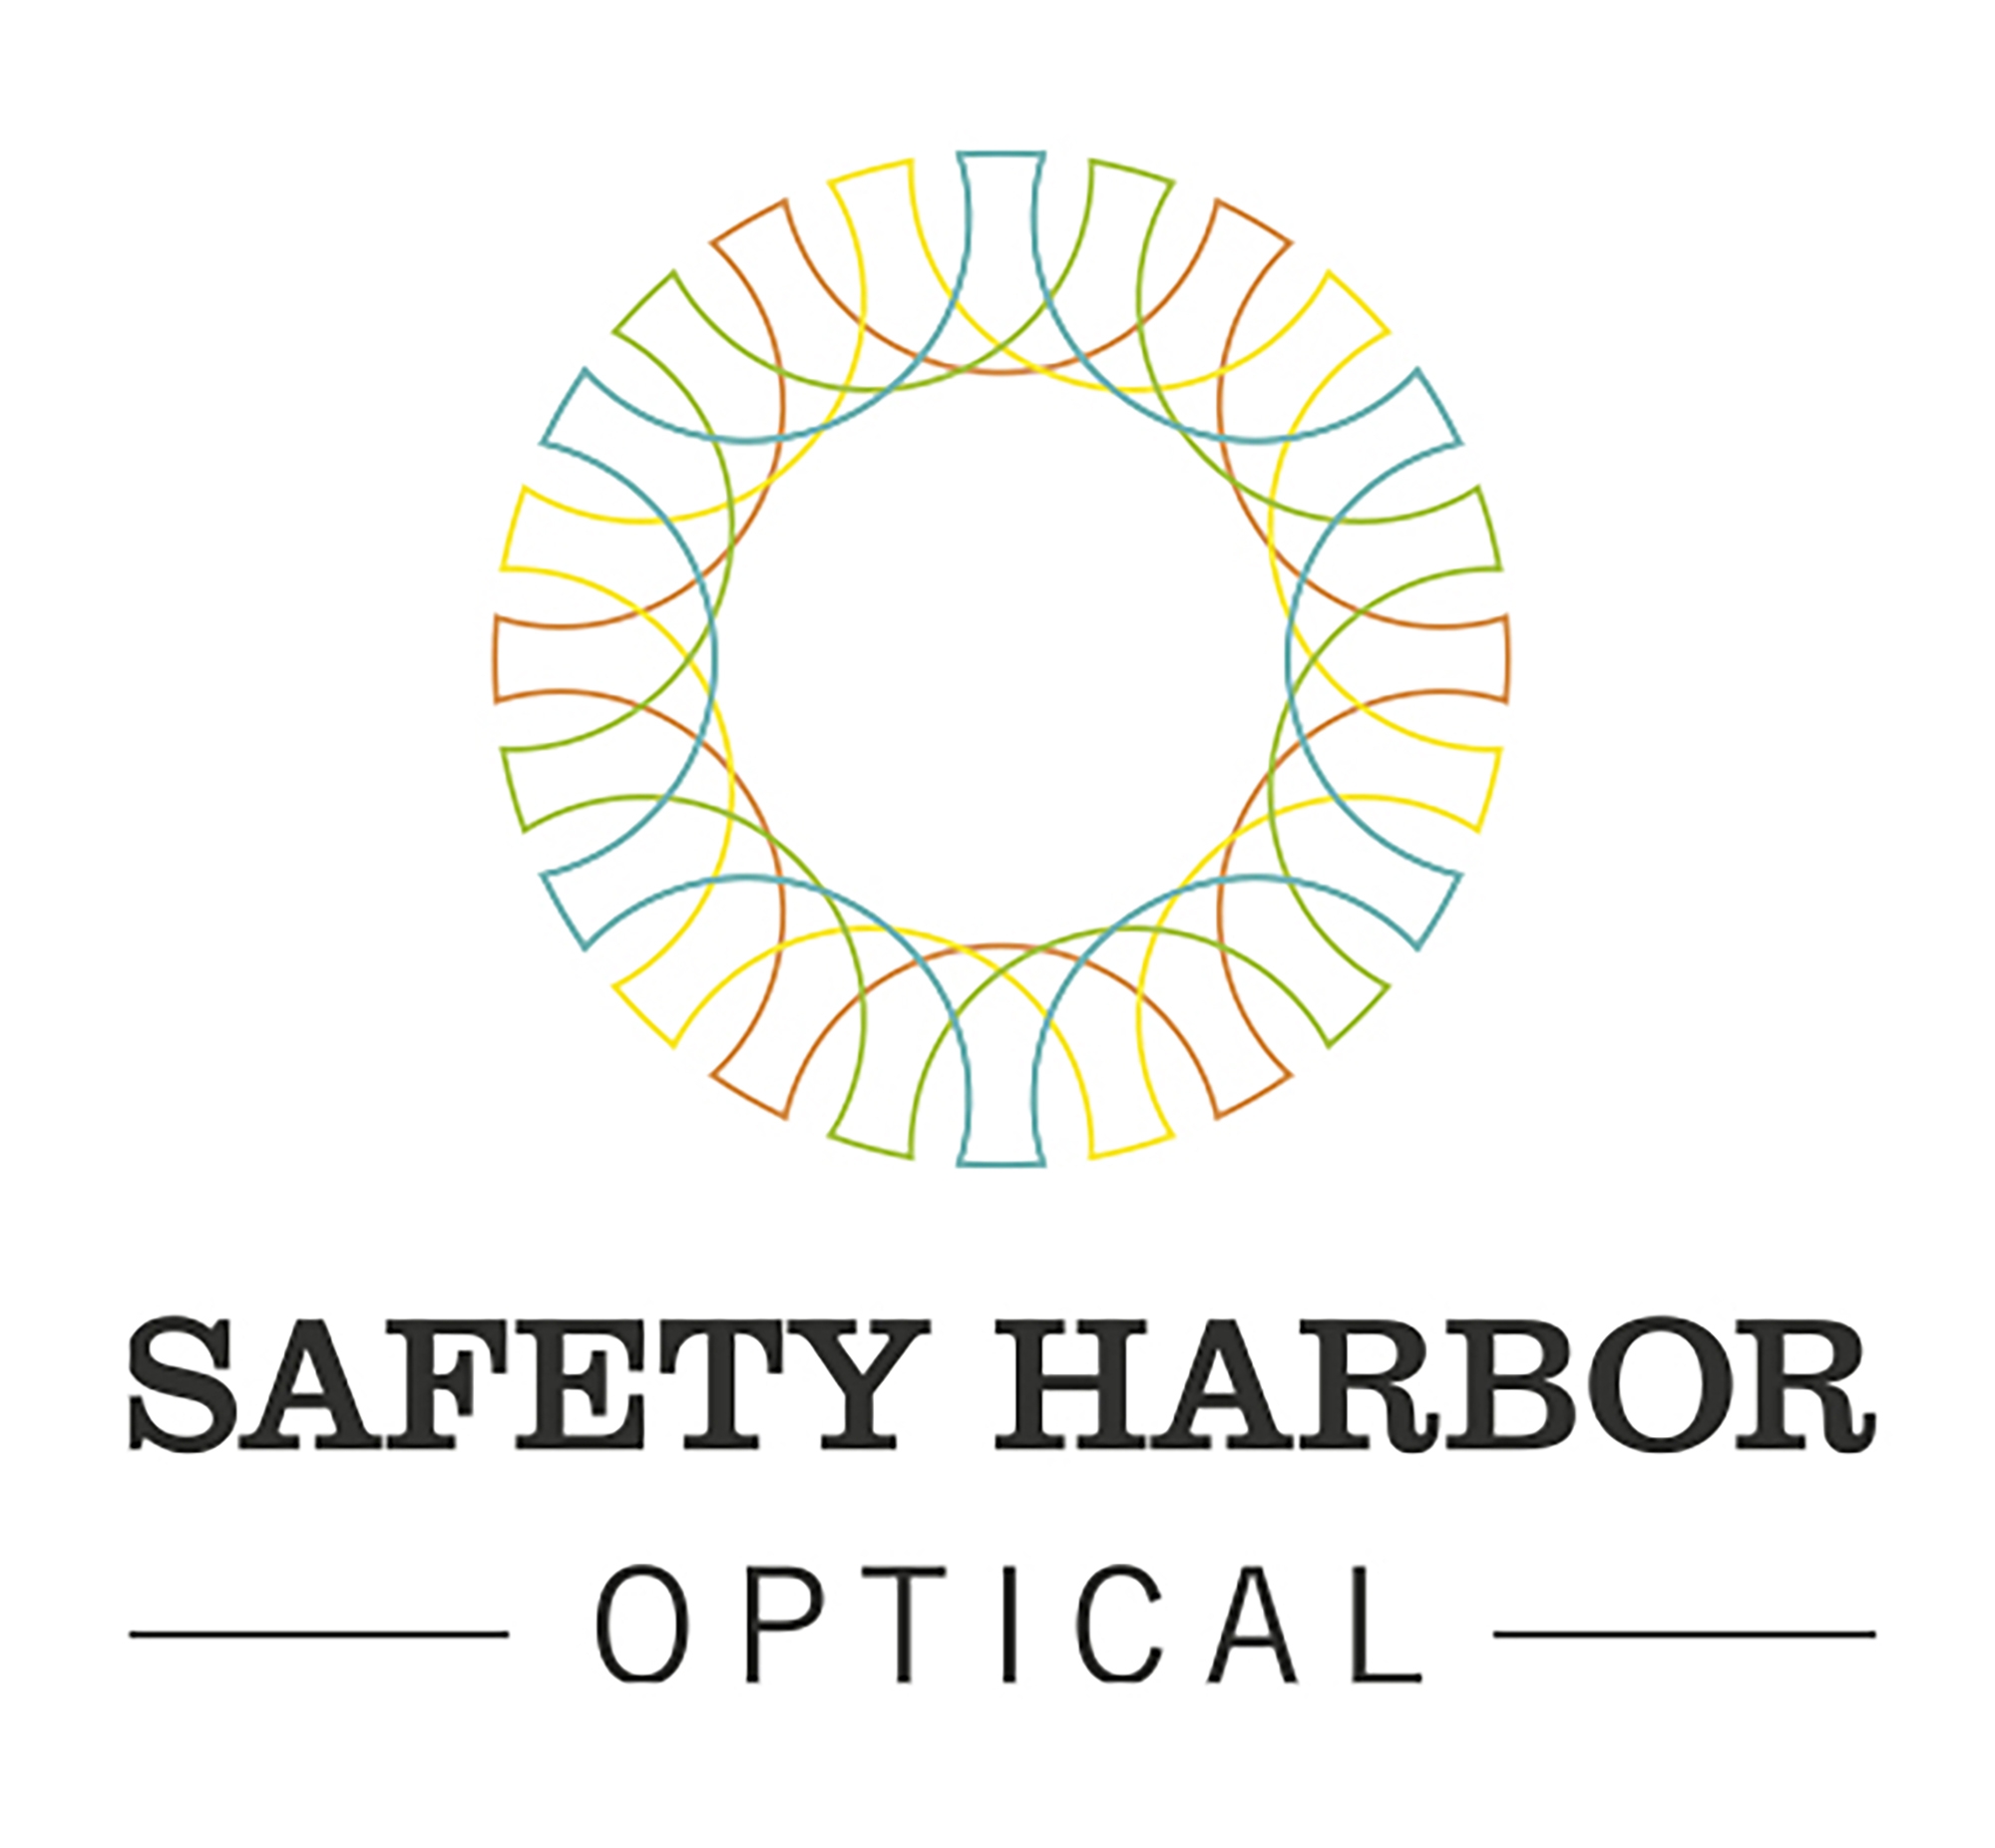 Safety Harbor Optical